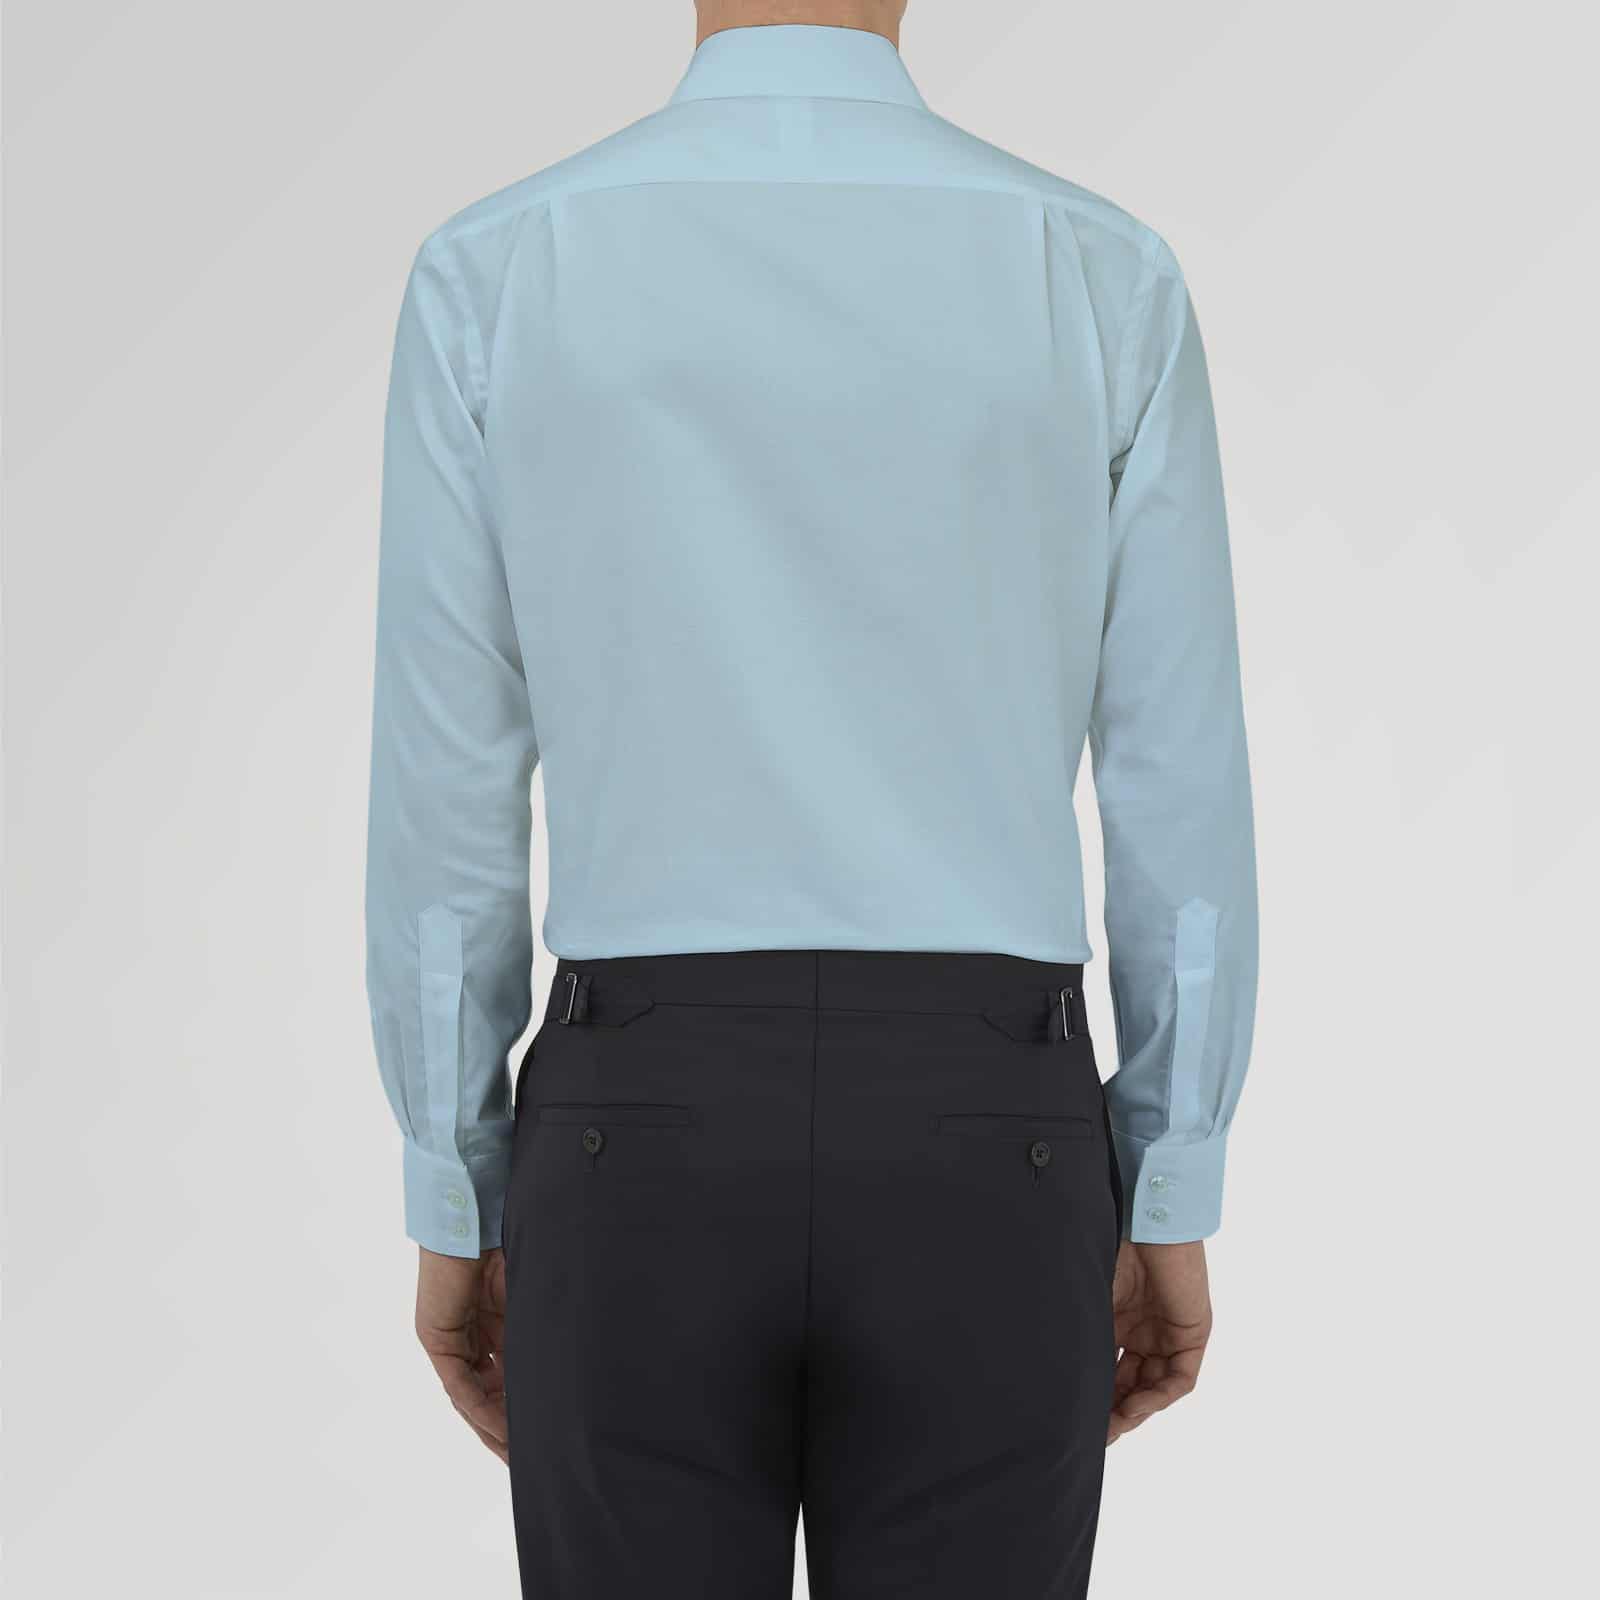 Men Blue Cotton Poly Solid Formal Shirt-RRBMS019